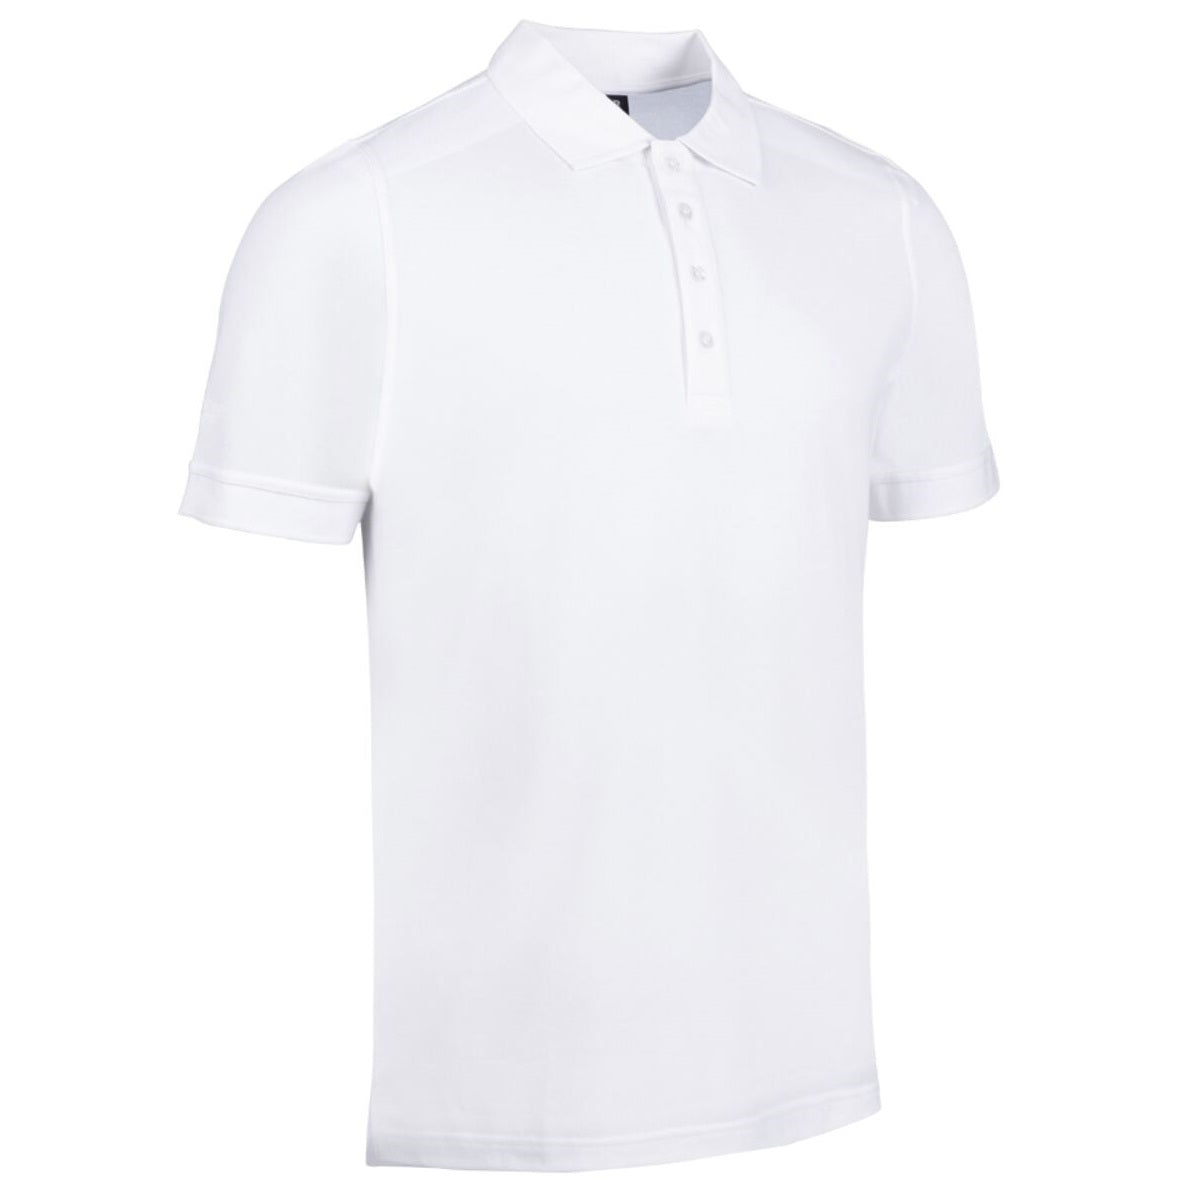 GLENMUIR Kinloch Cotton Pique Polo Shirt - Mens - White